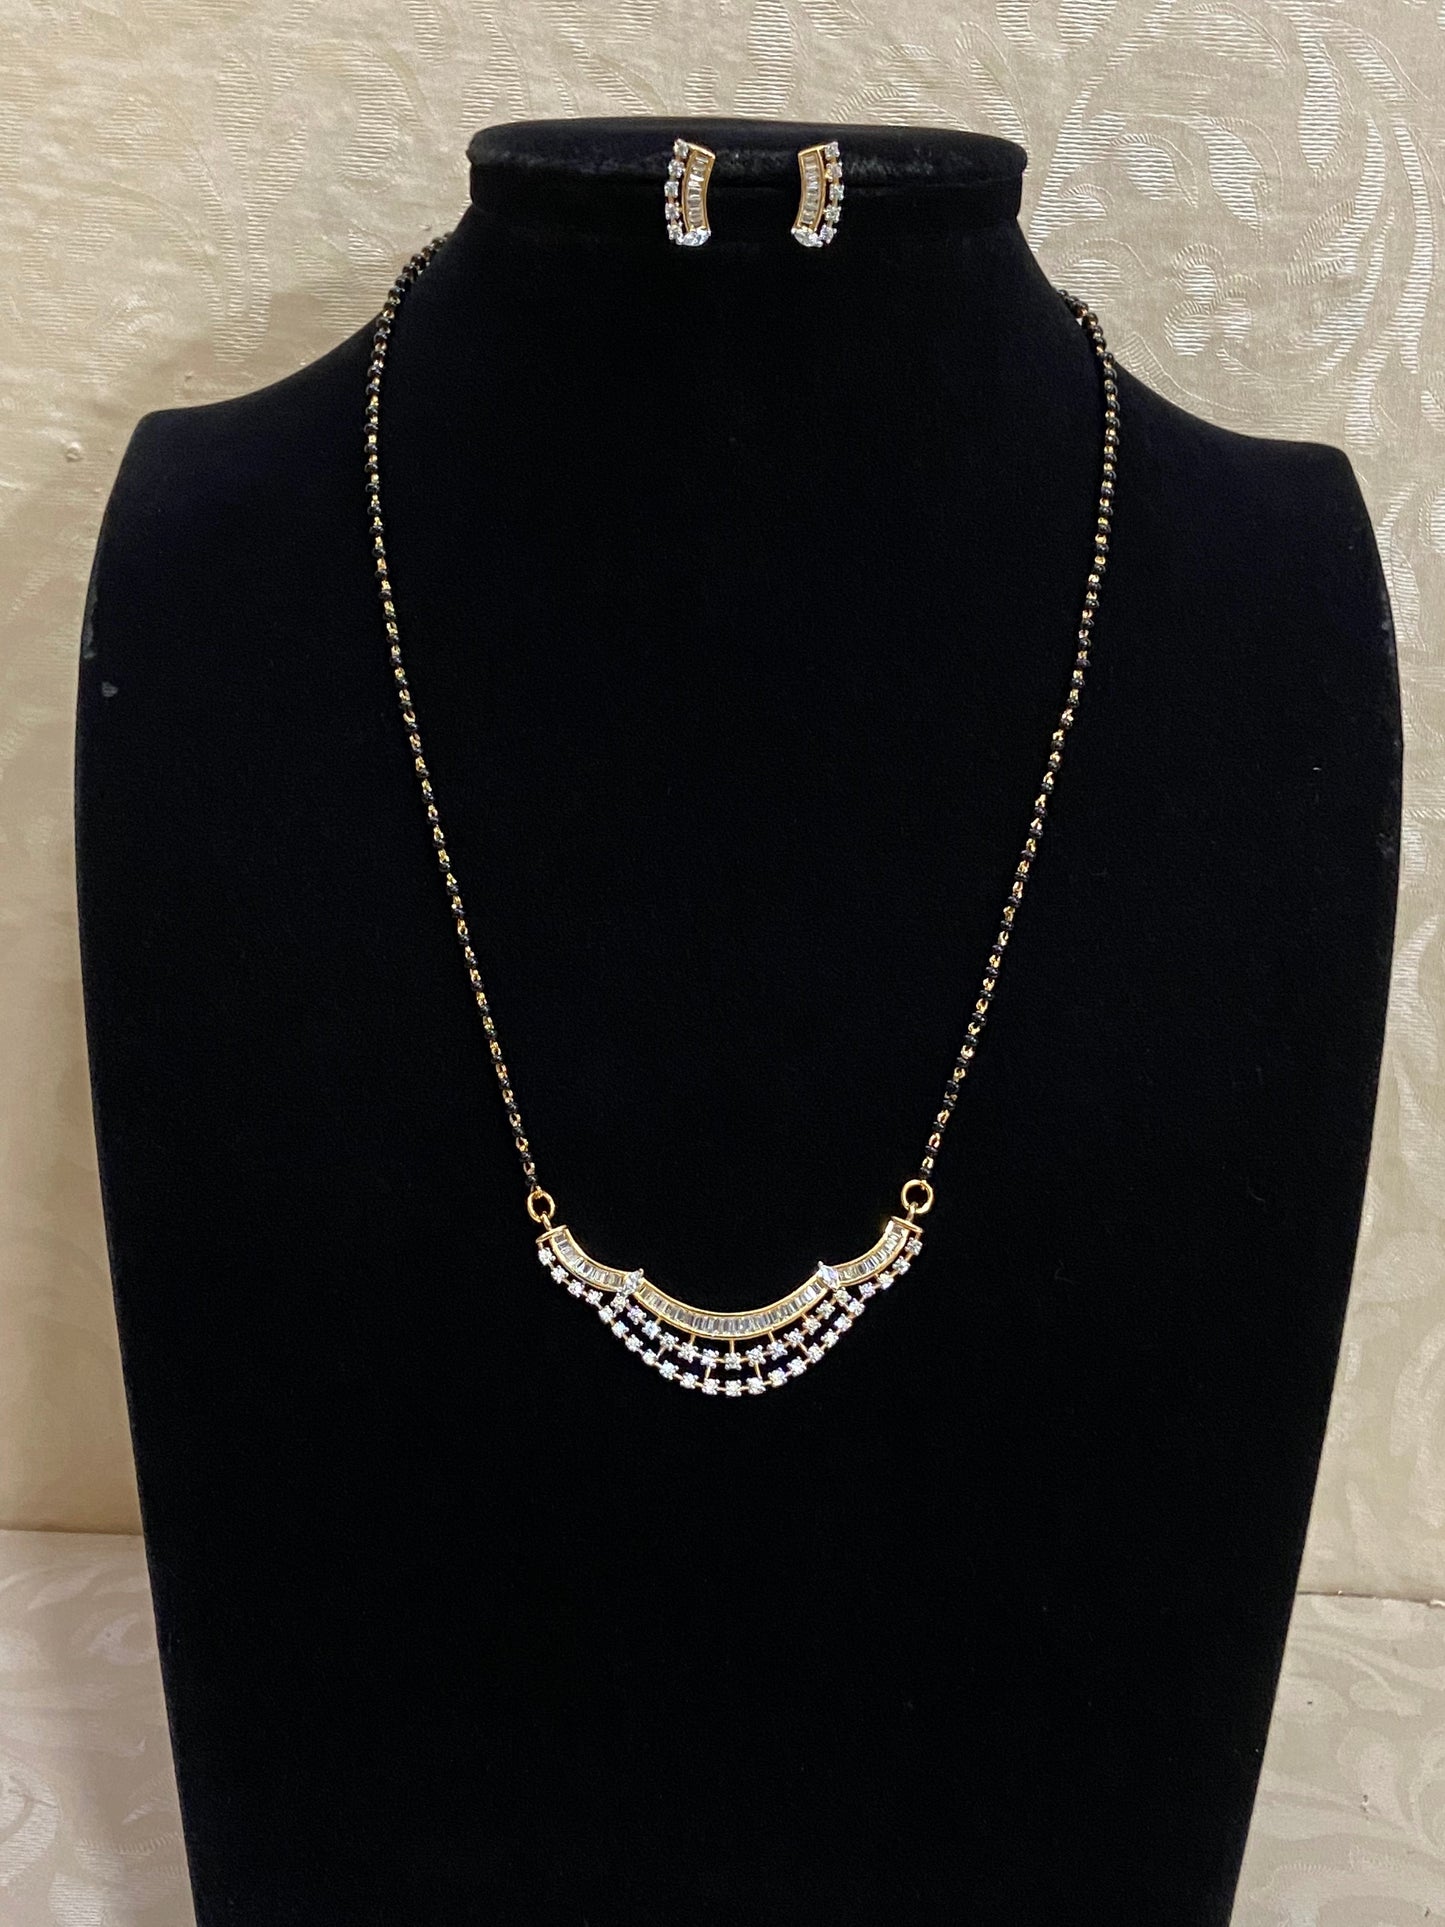 AD pendant mangalsutra | Black beads necklace